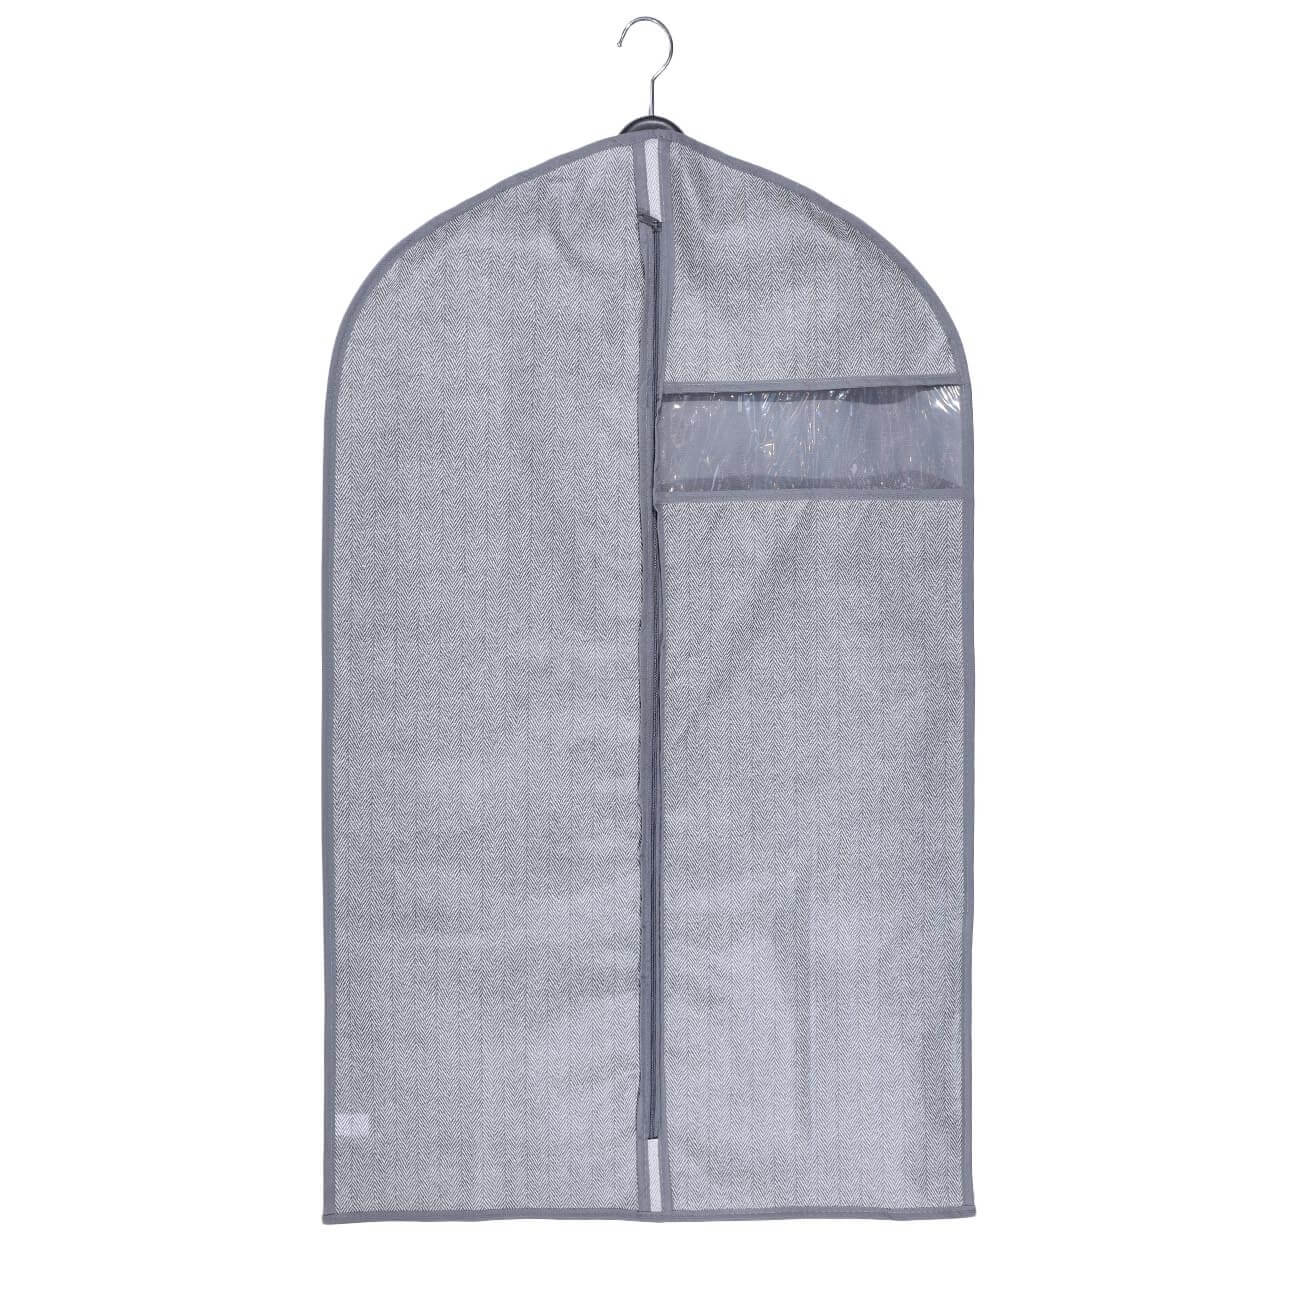 Чехол для одежды, 60х100 см, текстиль/ПВХ, серый, Pedant new чехол на стойку для одежды tatkraft